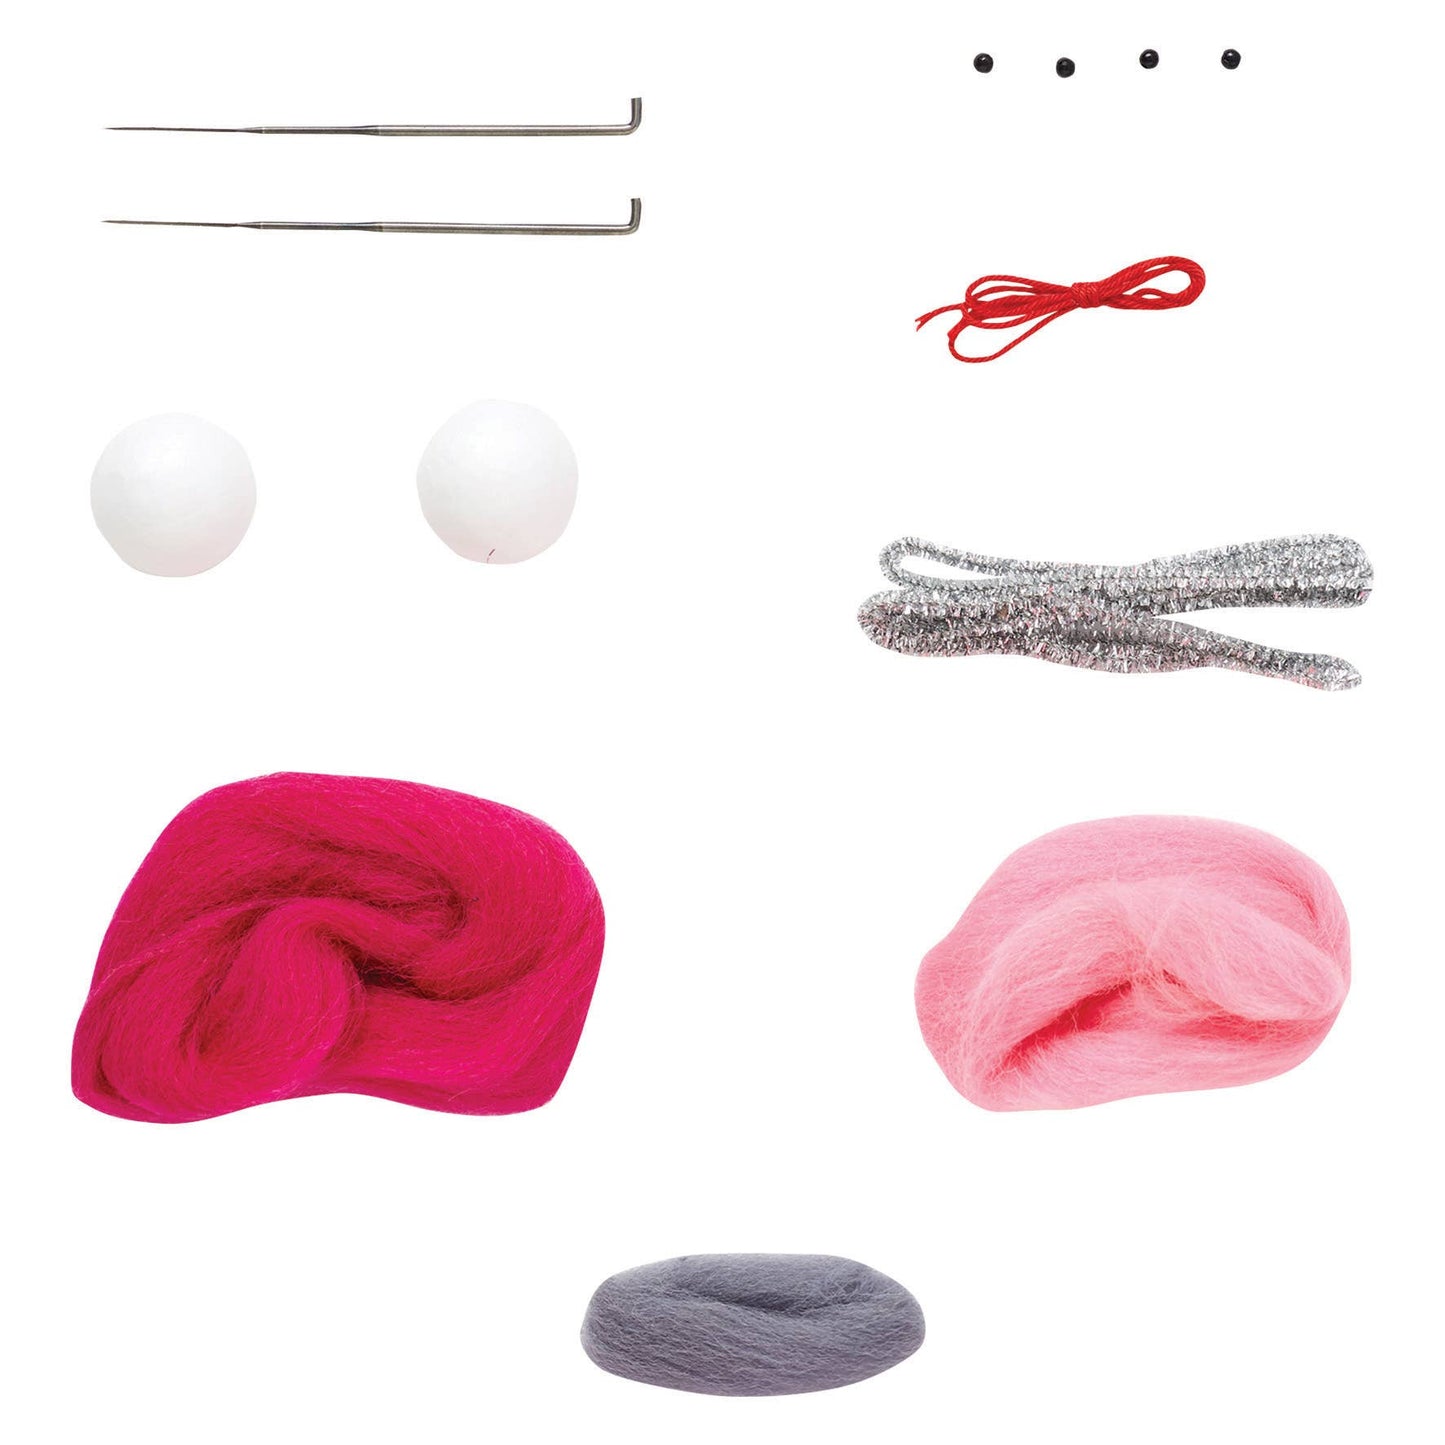 Simply Make Needle Felting Kit (2pk) - Flamingos